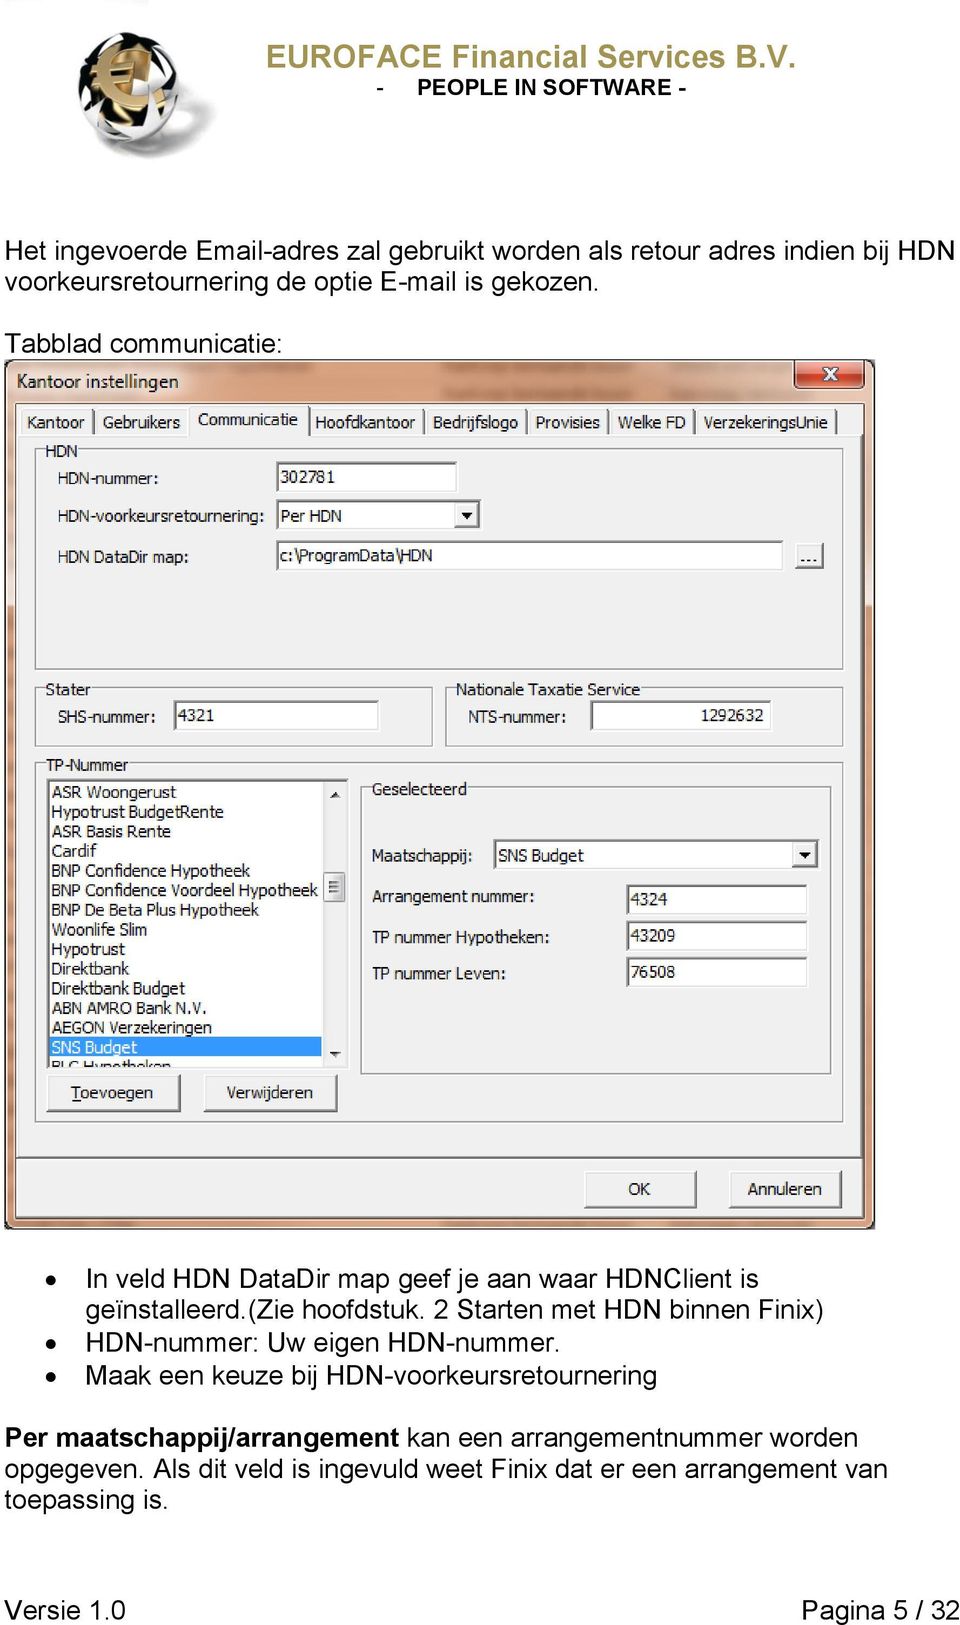 2 Starten met HDN binnen Finix) HDN-nummer: Uw eigen HDN-nummer.